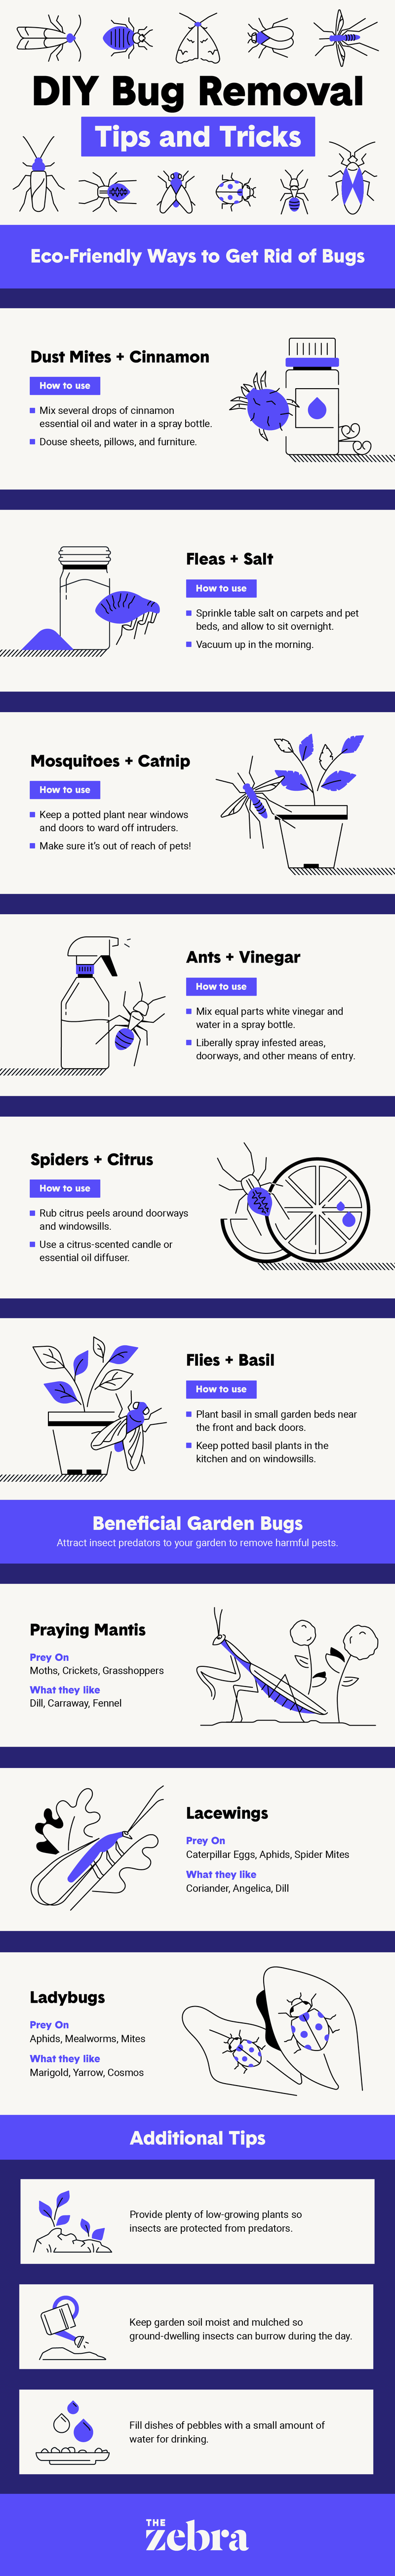 diy bug prevention infographic